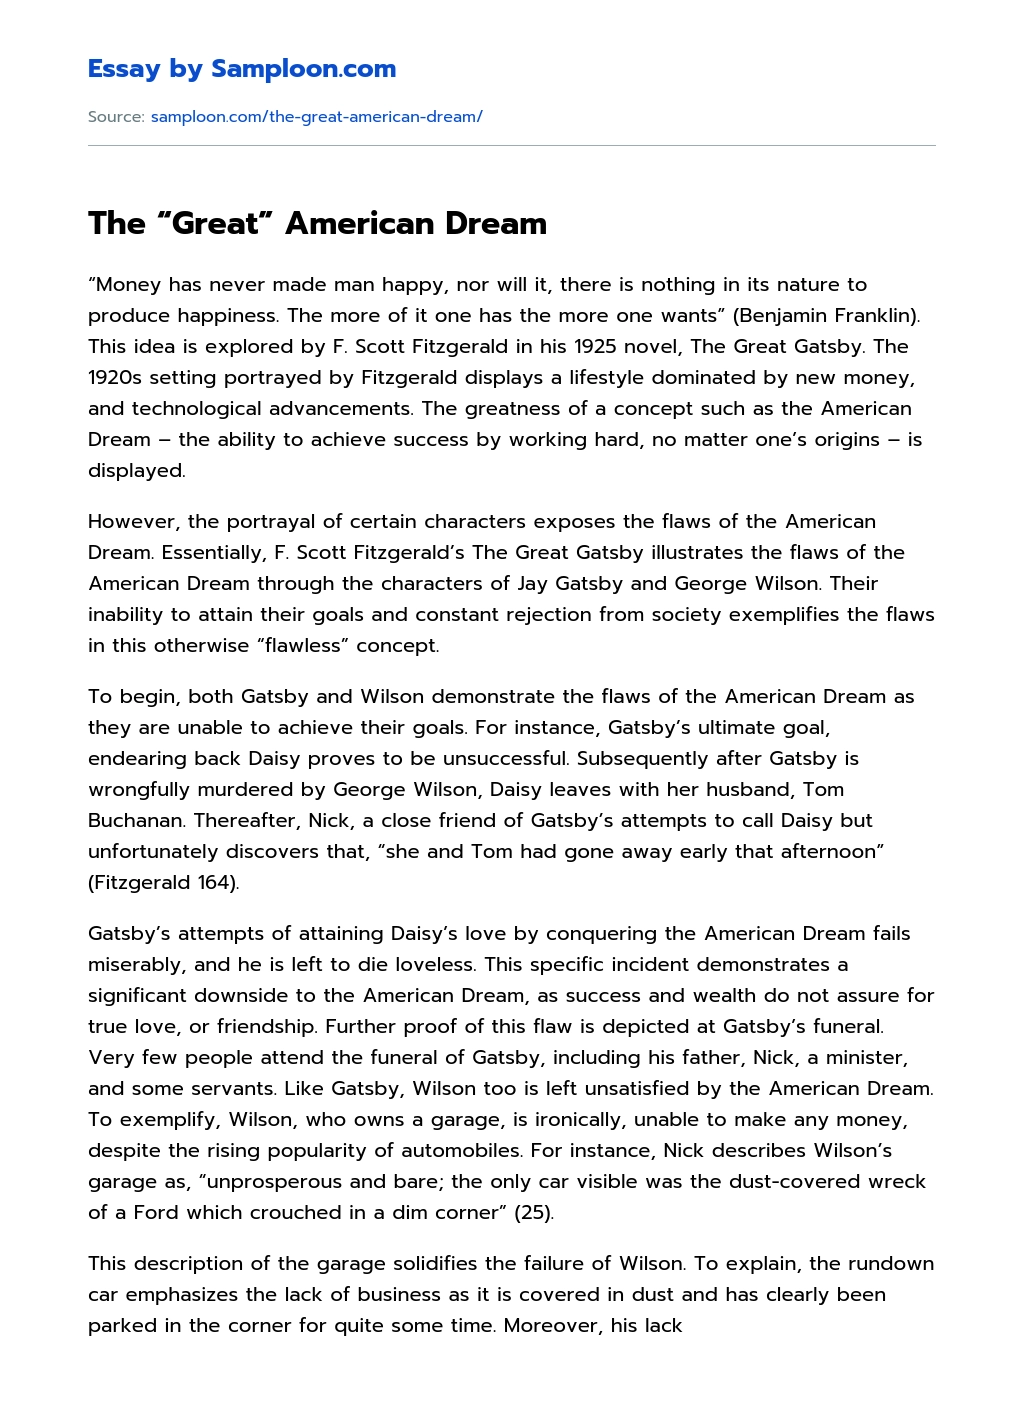 The “Great” American Dream essay